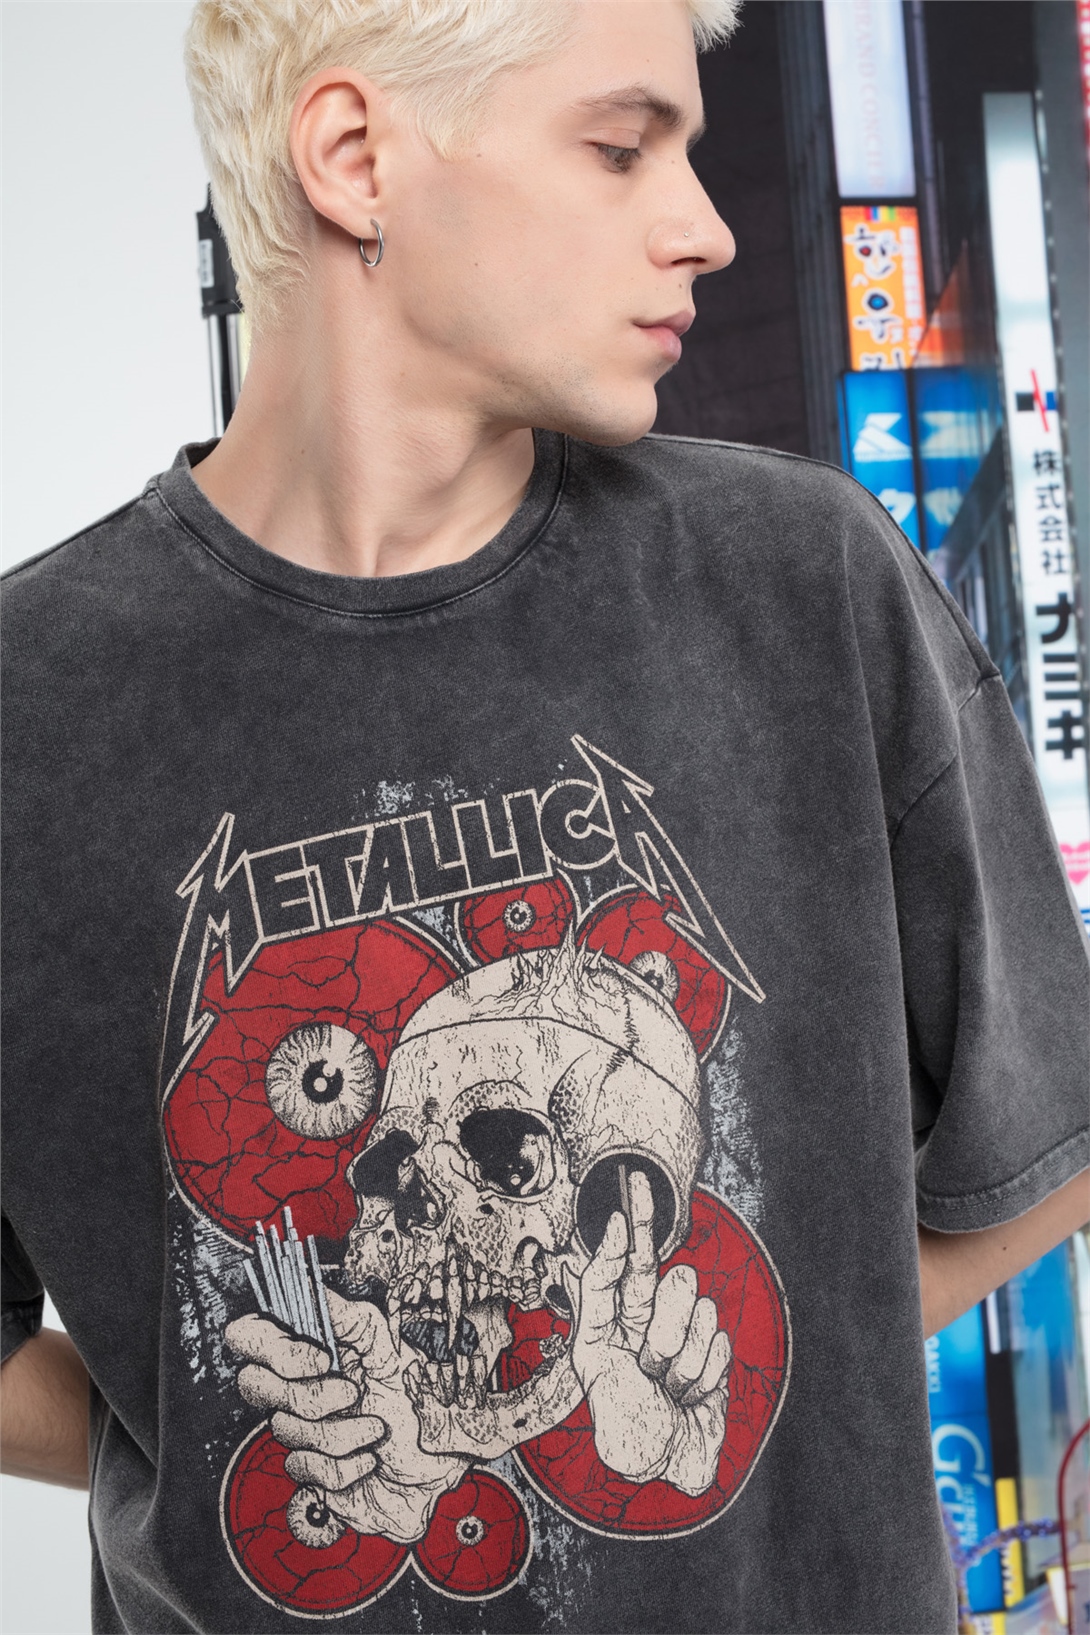 Trendiz Metallica Tshirt Antrasit